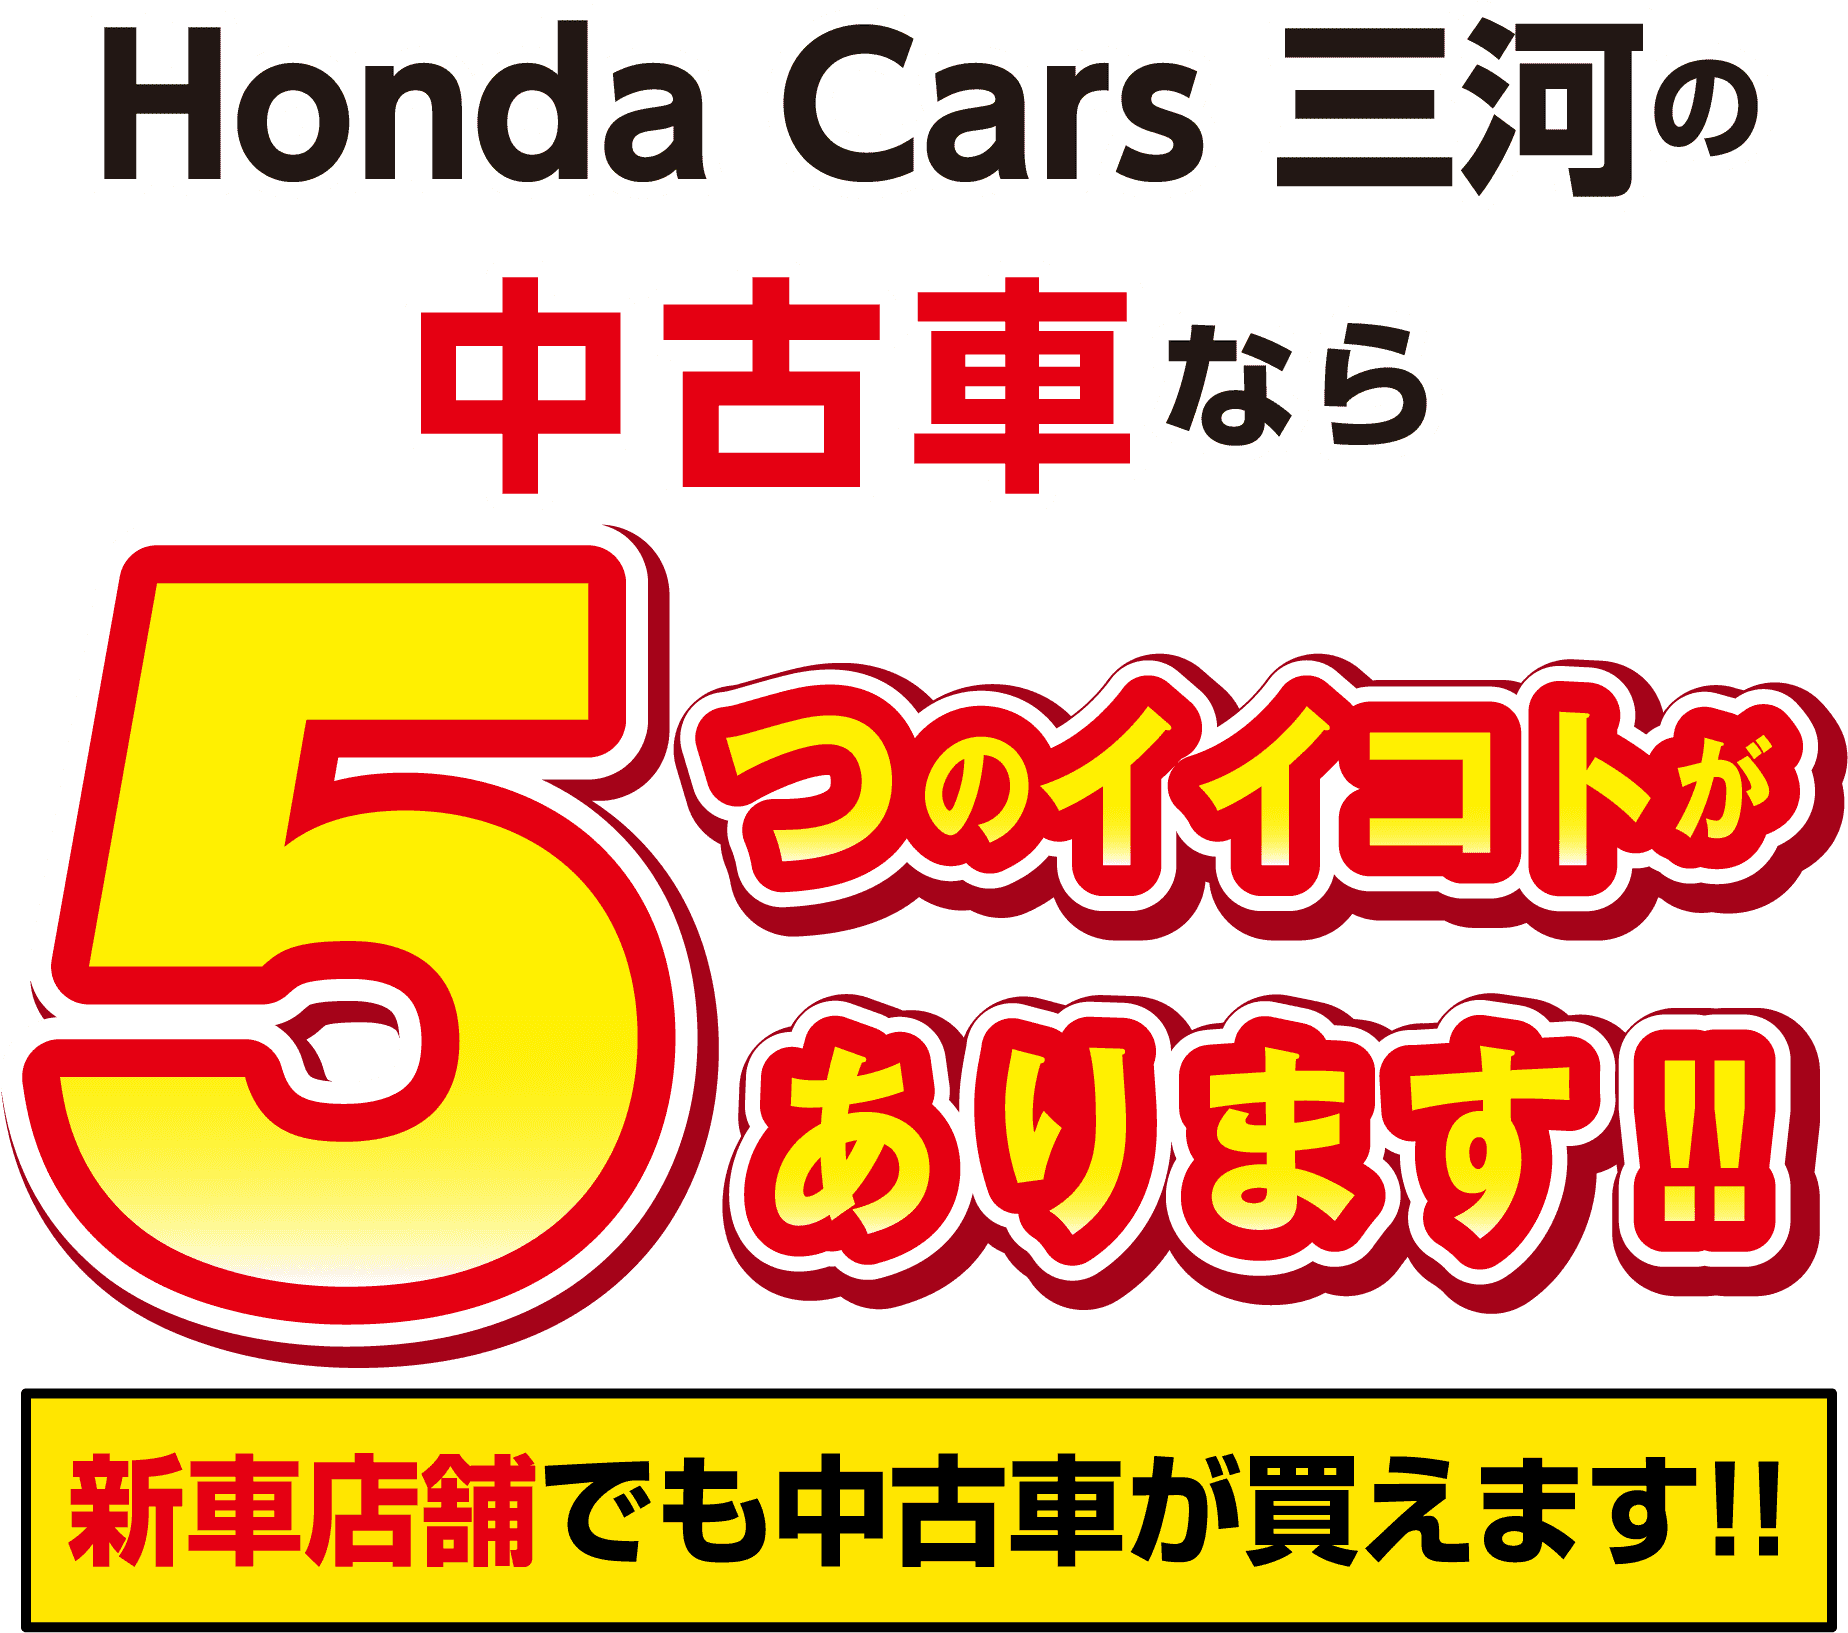 Honda Cars 三河の中古車なら５つのイイコトがあります‼︎ 新車店舗でも中古車が買えます！！